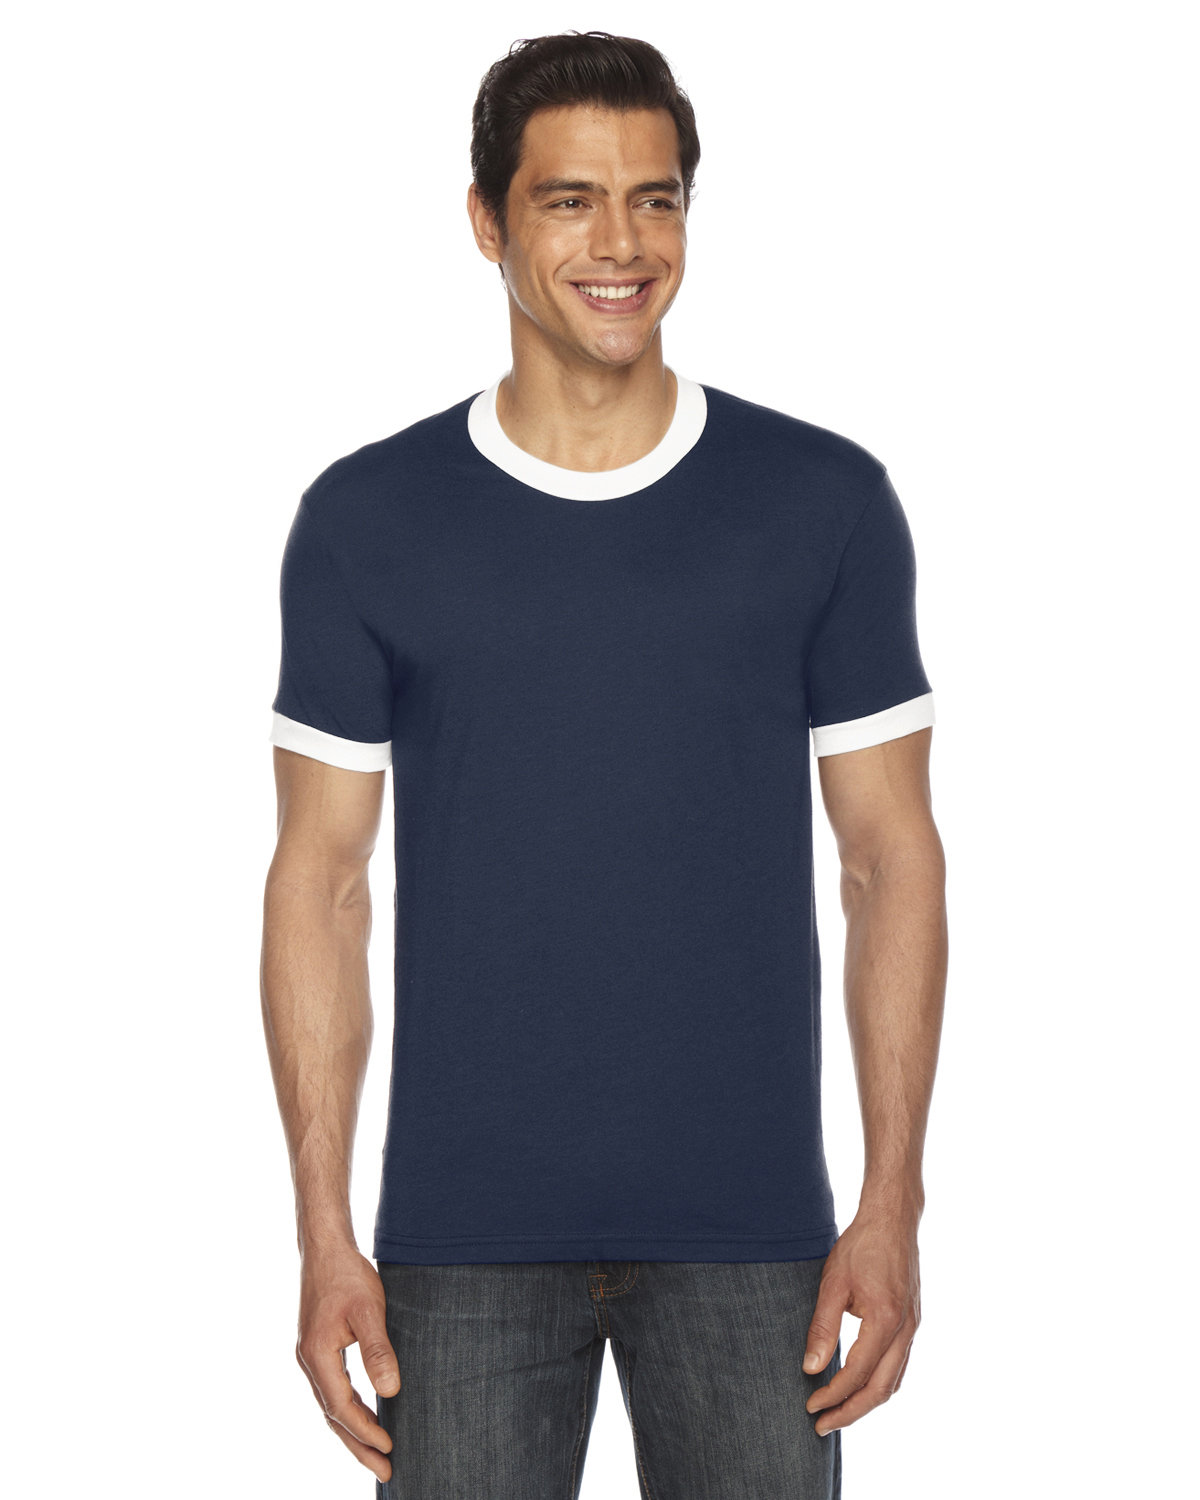 BB410W - American Apparel UNISEX Poly-Cotton Short-Sleeve Ringer T-Shirt